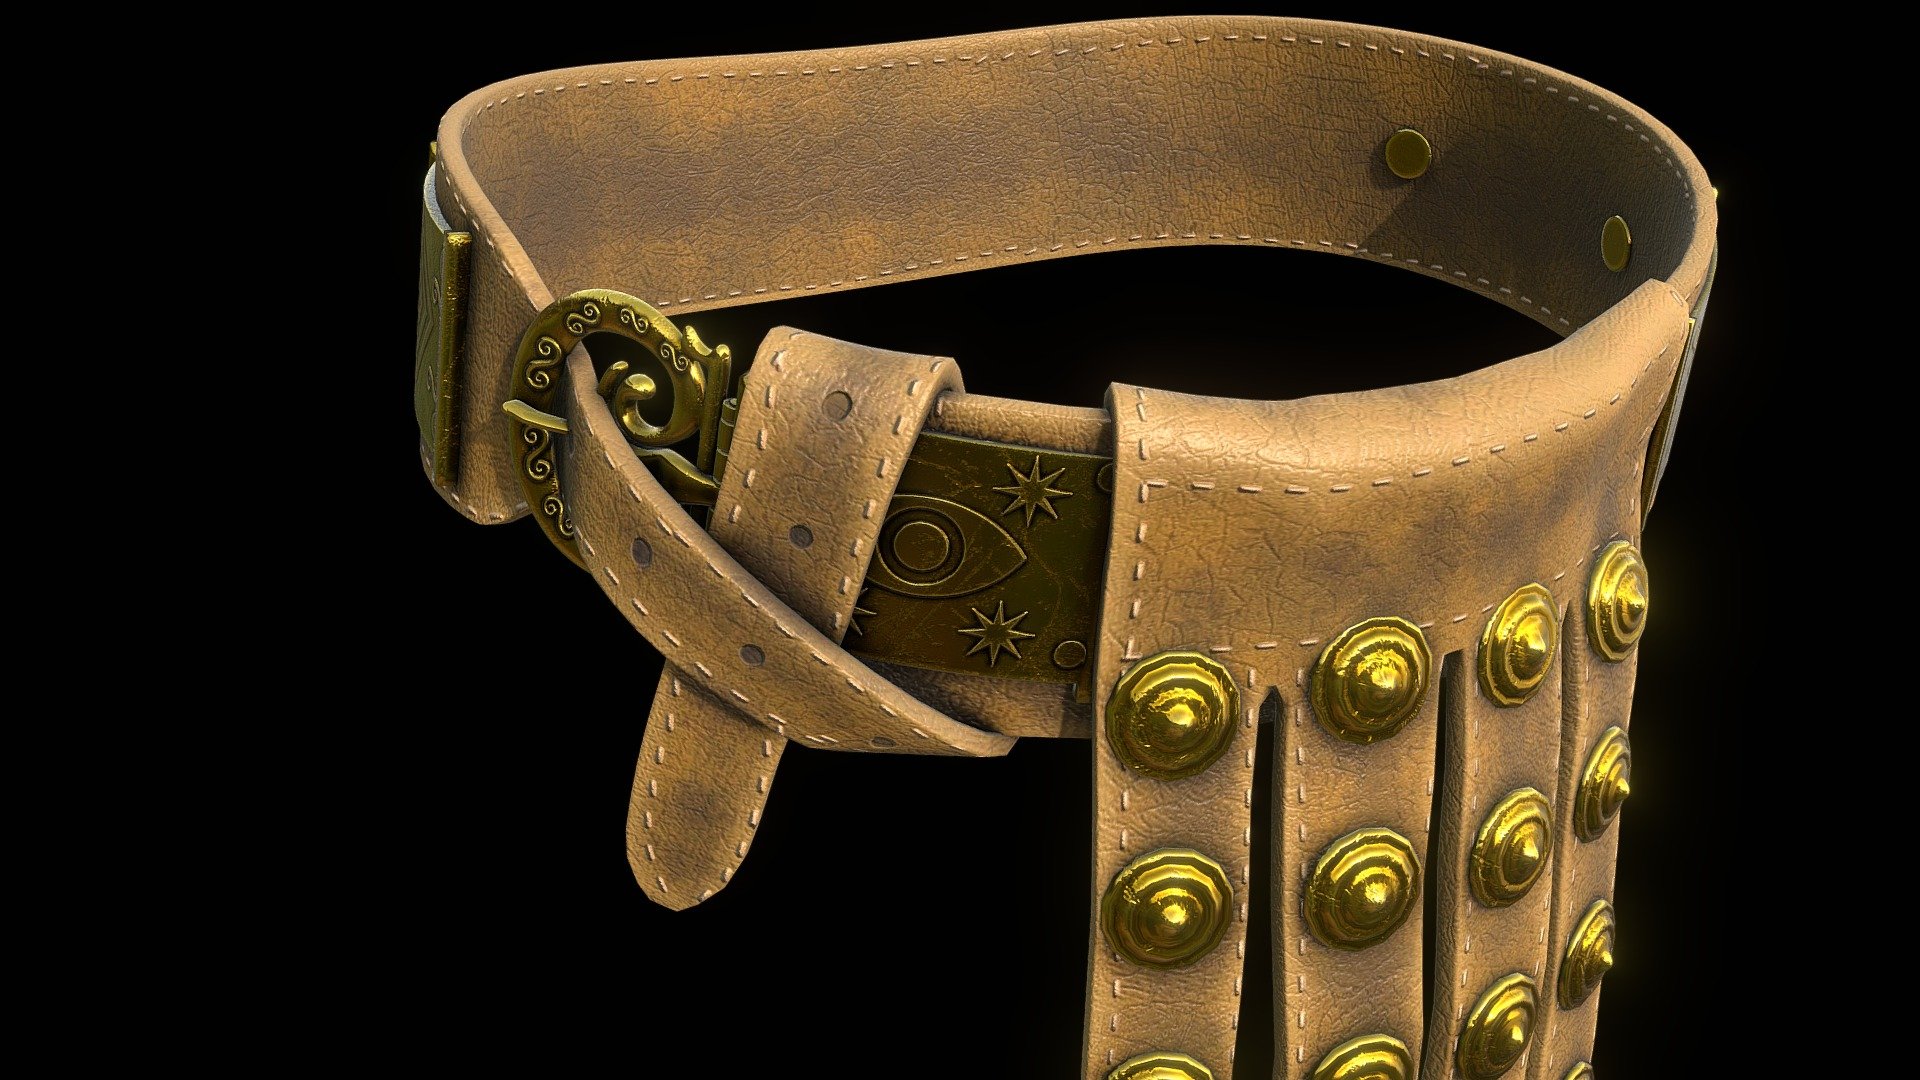 Roman soldier's belt - Cingulum militare - Download Free 3D model